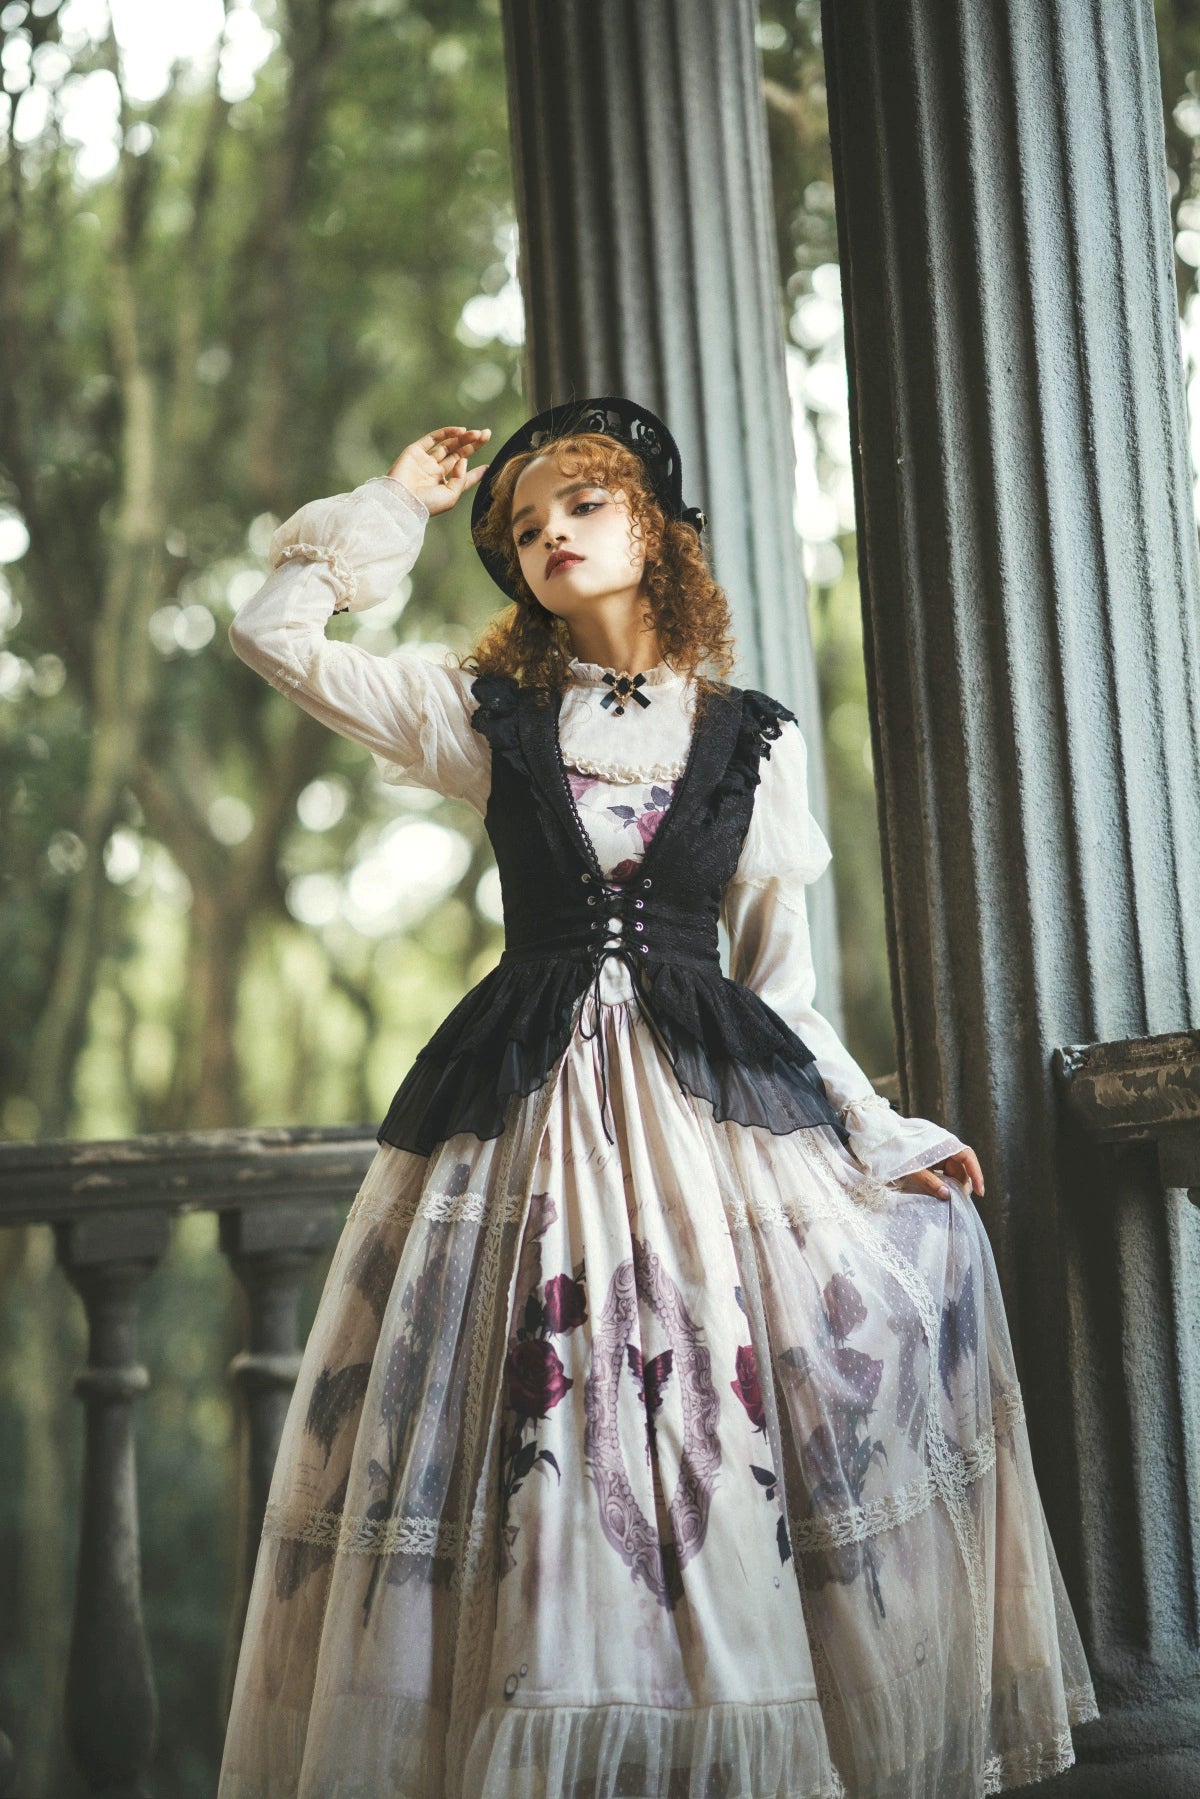 (BFM)Sweet Date~Classical Lolita Rose Print Princess Dress Set   